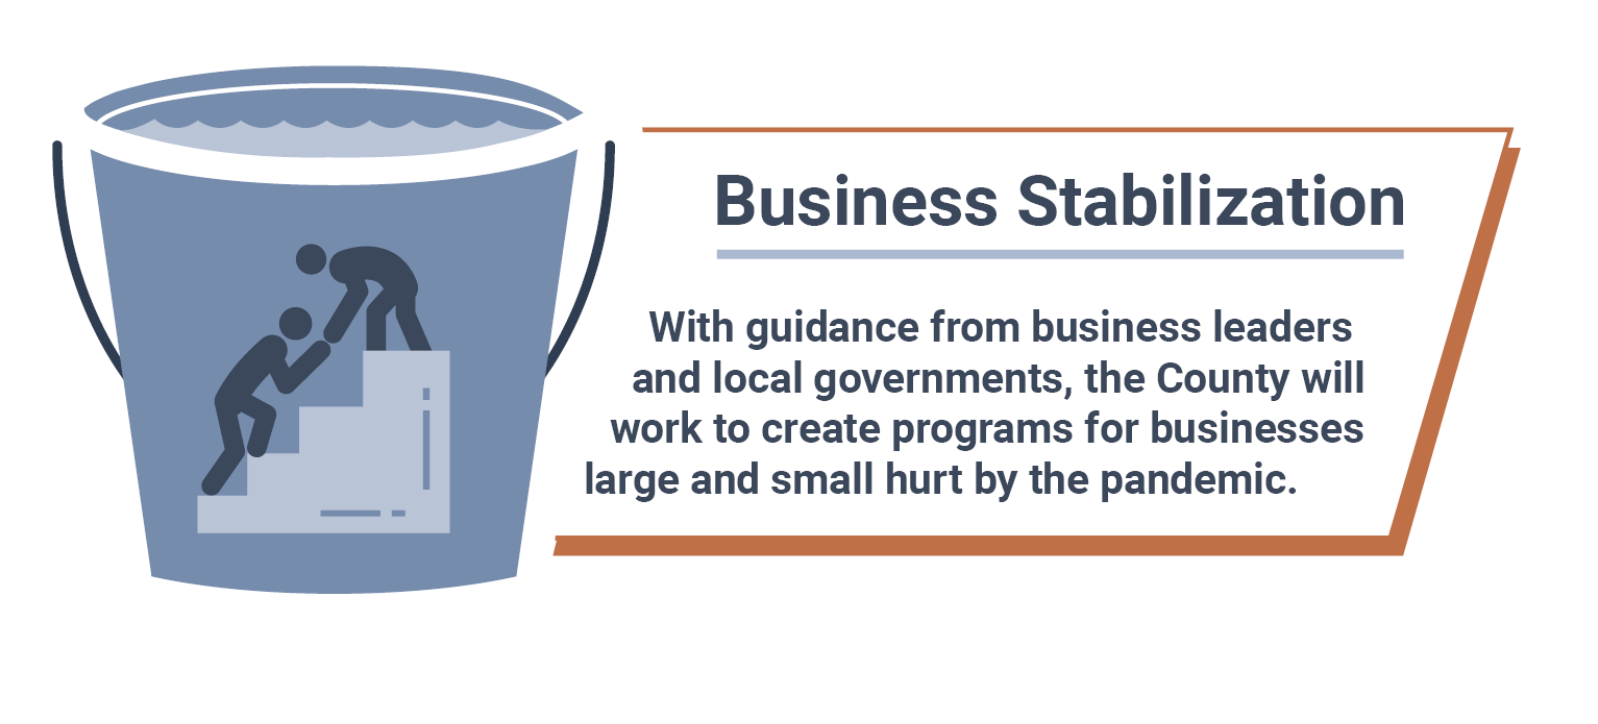 Lakeshore Advantage Announces Request For Business Stabilization ARPA Projects blog image 